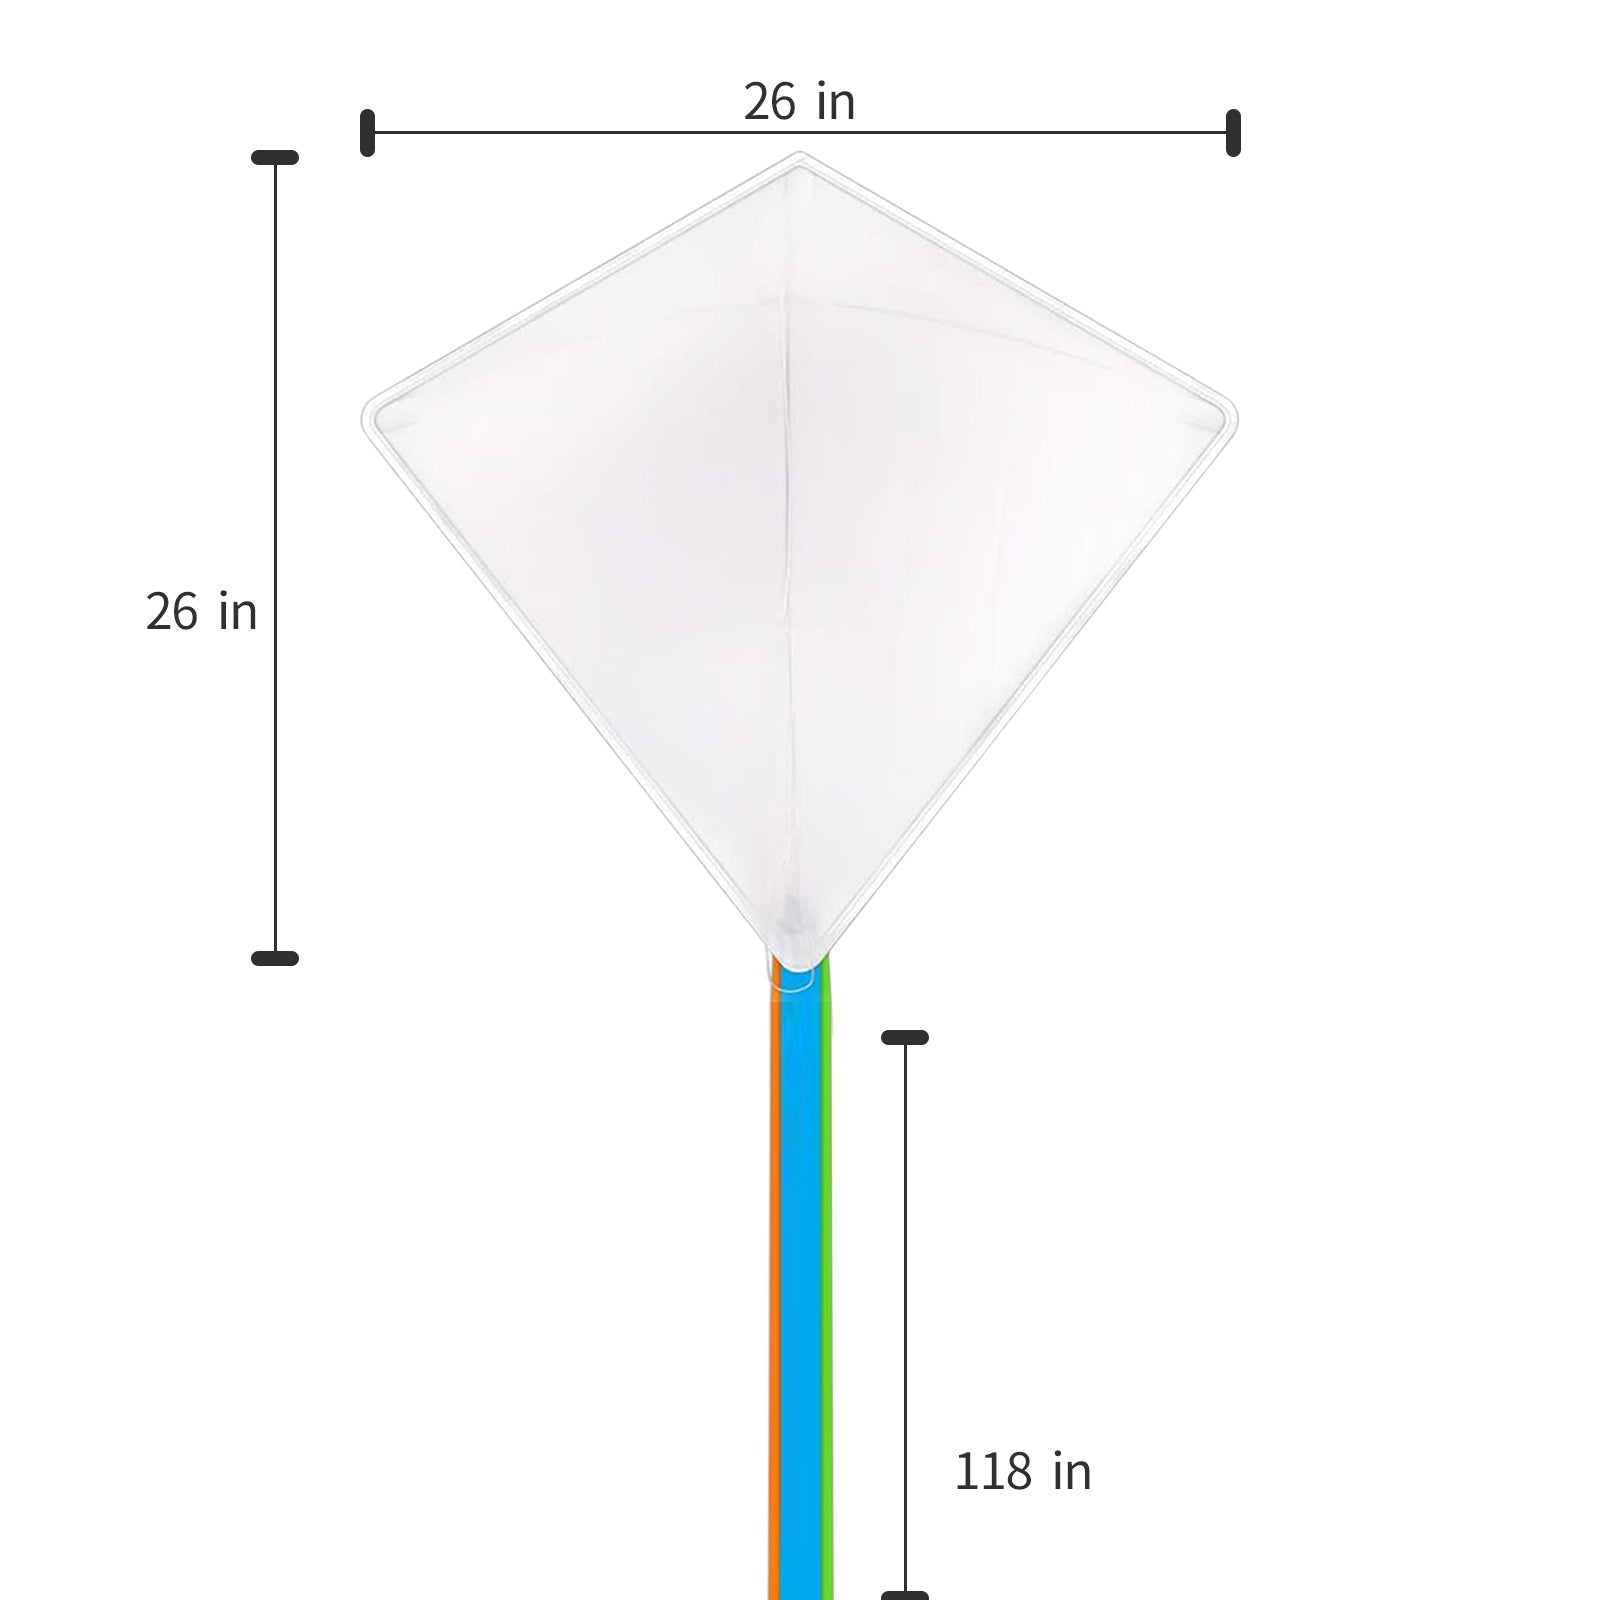 DIY Paper Kites - Simple Diamond Kite ⋆ Dream a Little Bigger